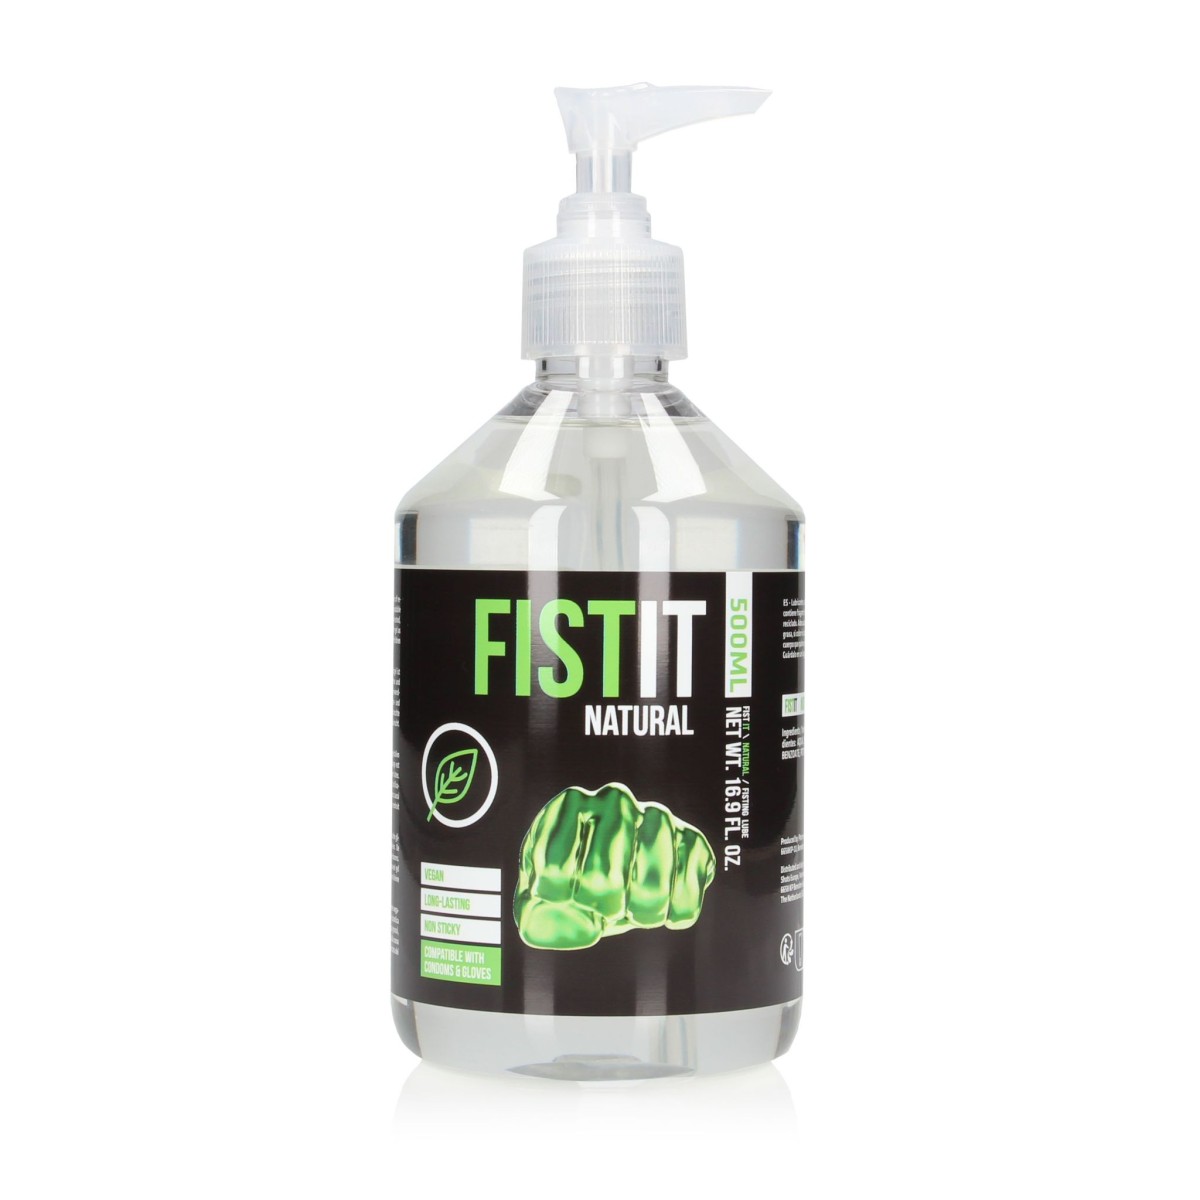 Shots Fist-It Natural Water Based Lubricant 500 ml Pump, vegánsky lubrikant na vodnej báze pre fisting